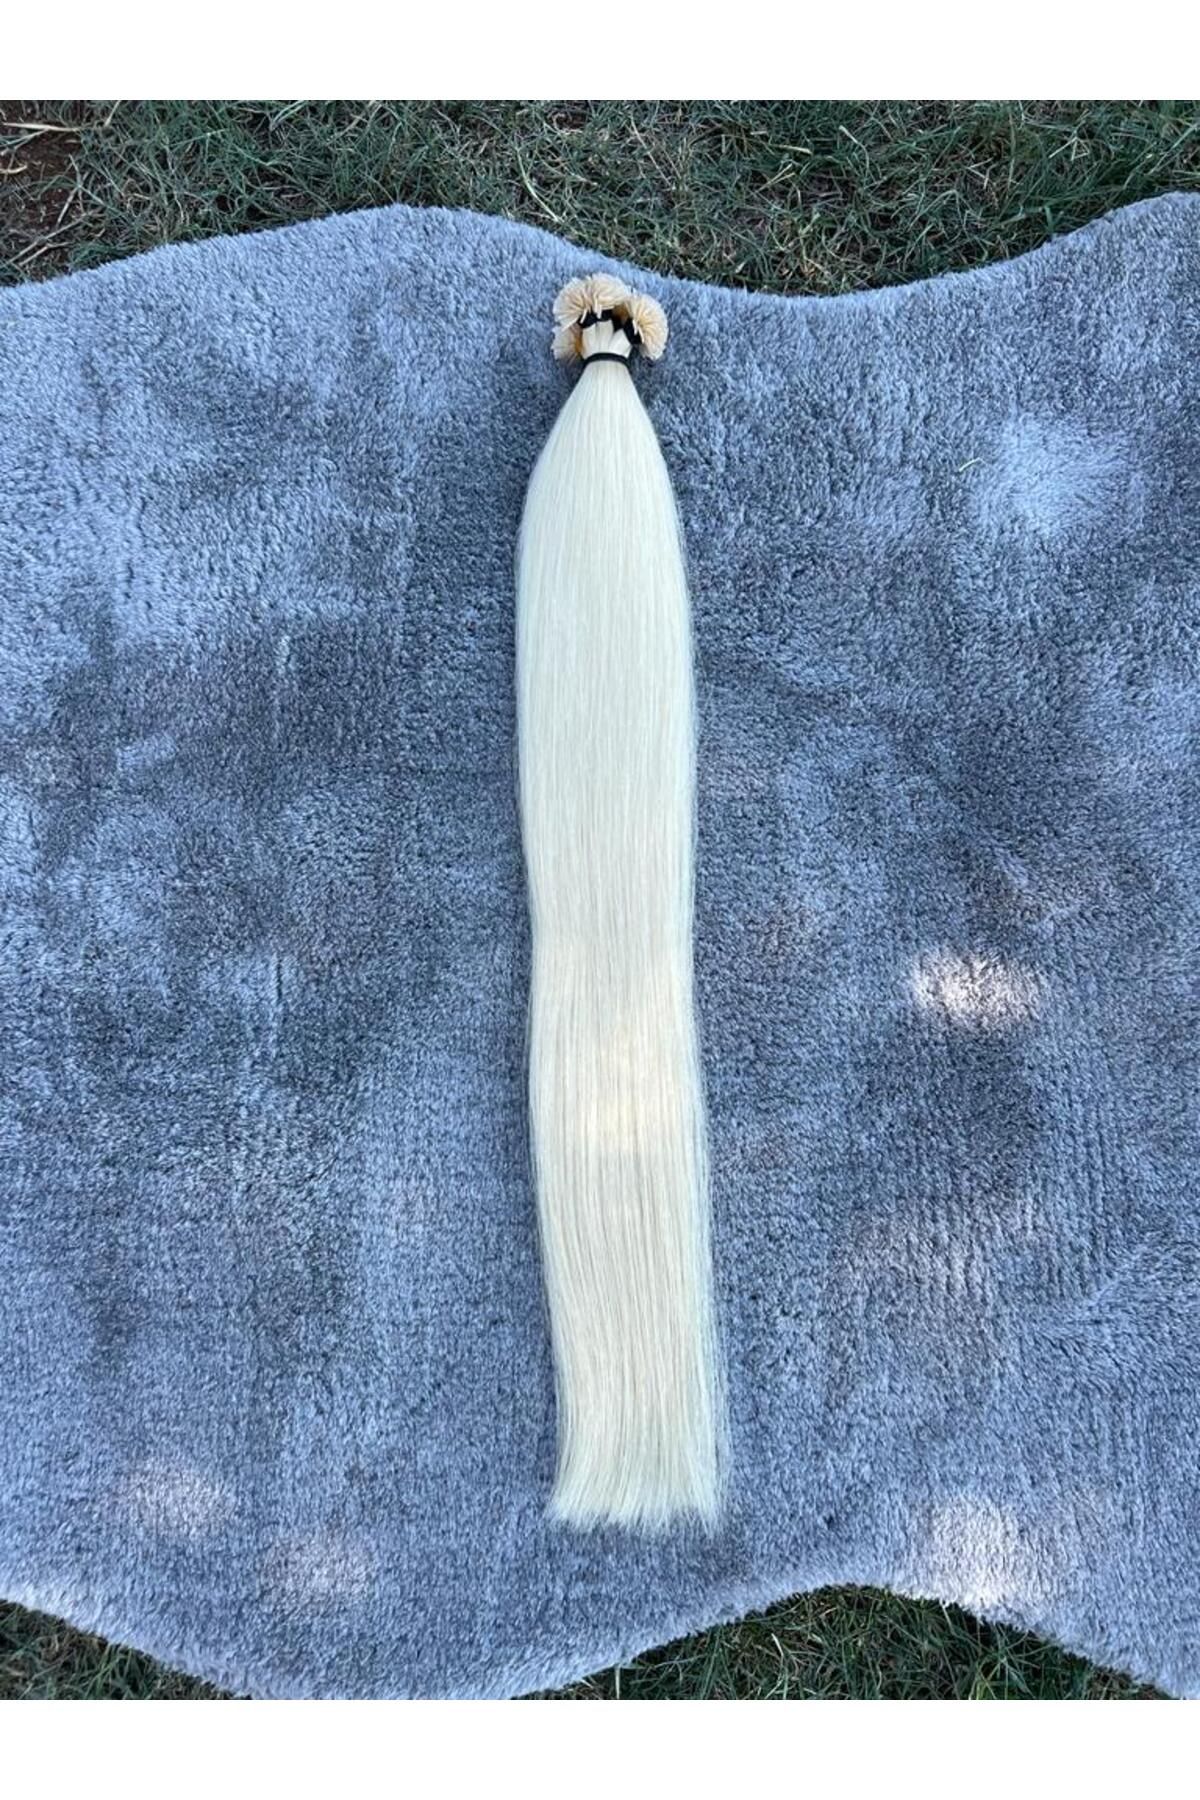 Suzan Peruk 70 cm 200 ADET (0.6gr) 60A %100 Doğal Gerçek Insan saçı Mikro Kaynak saç